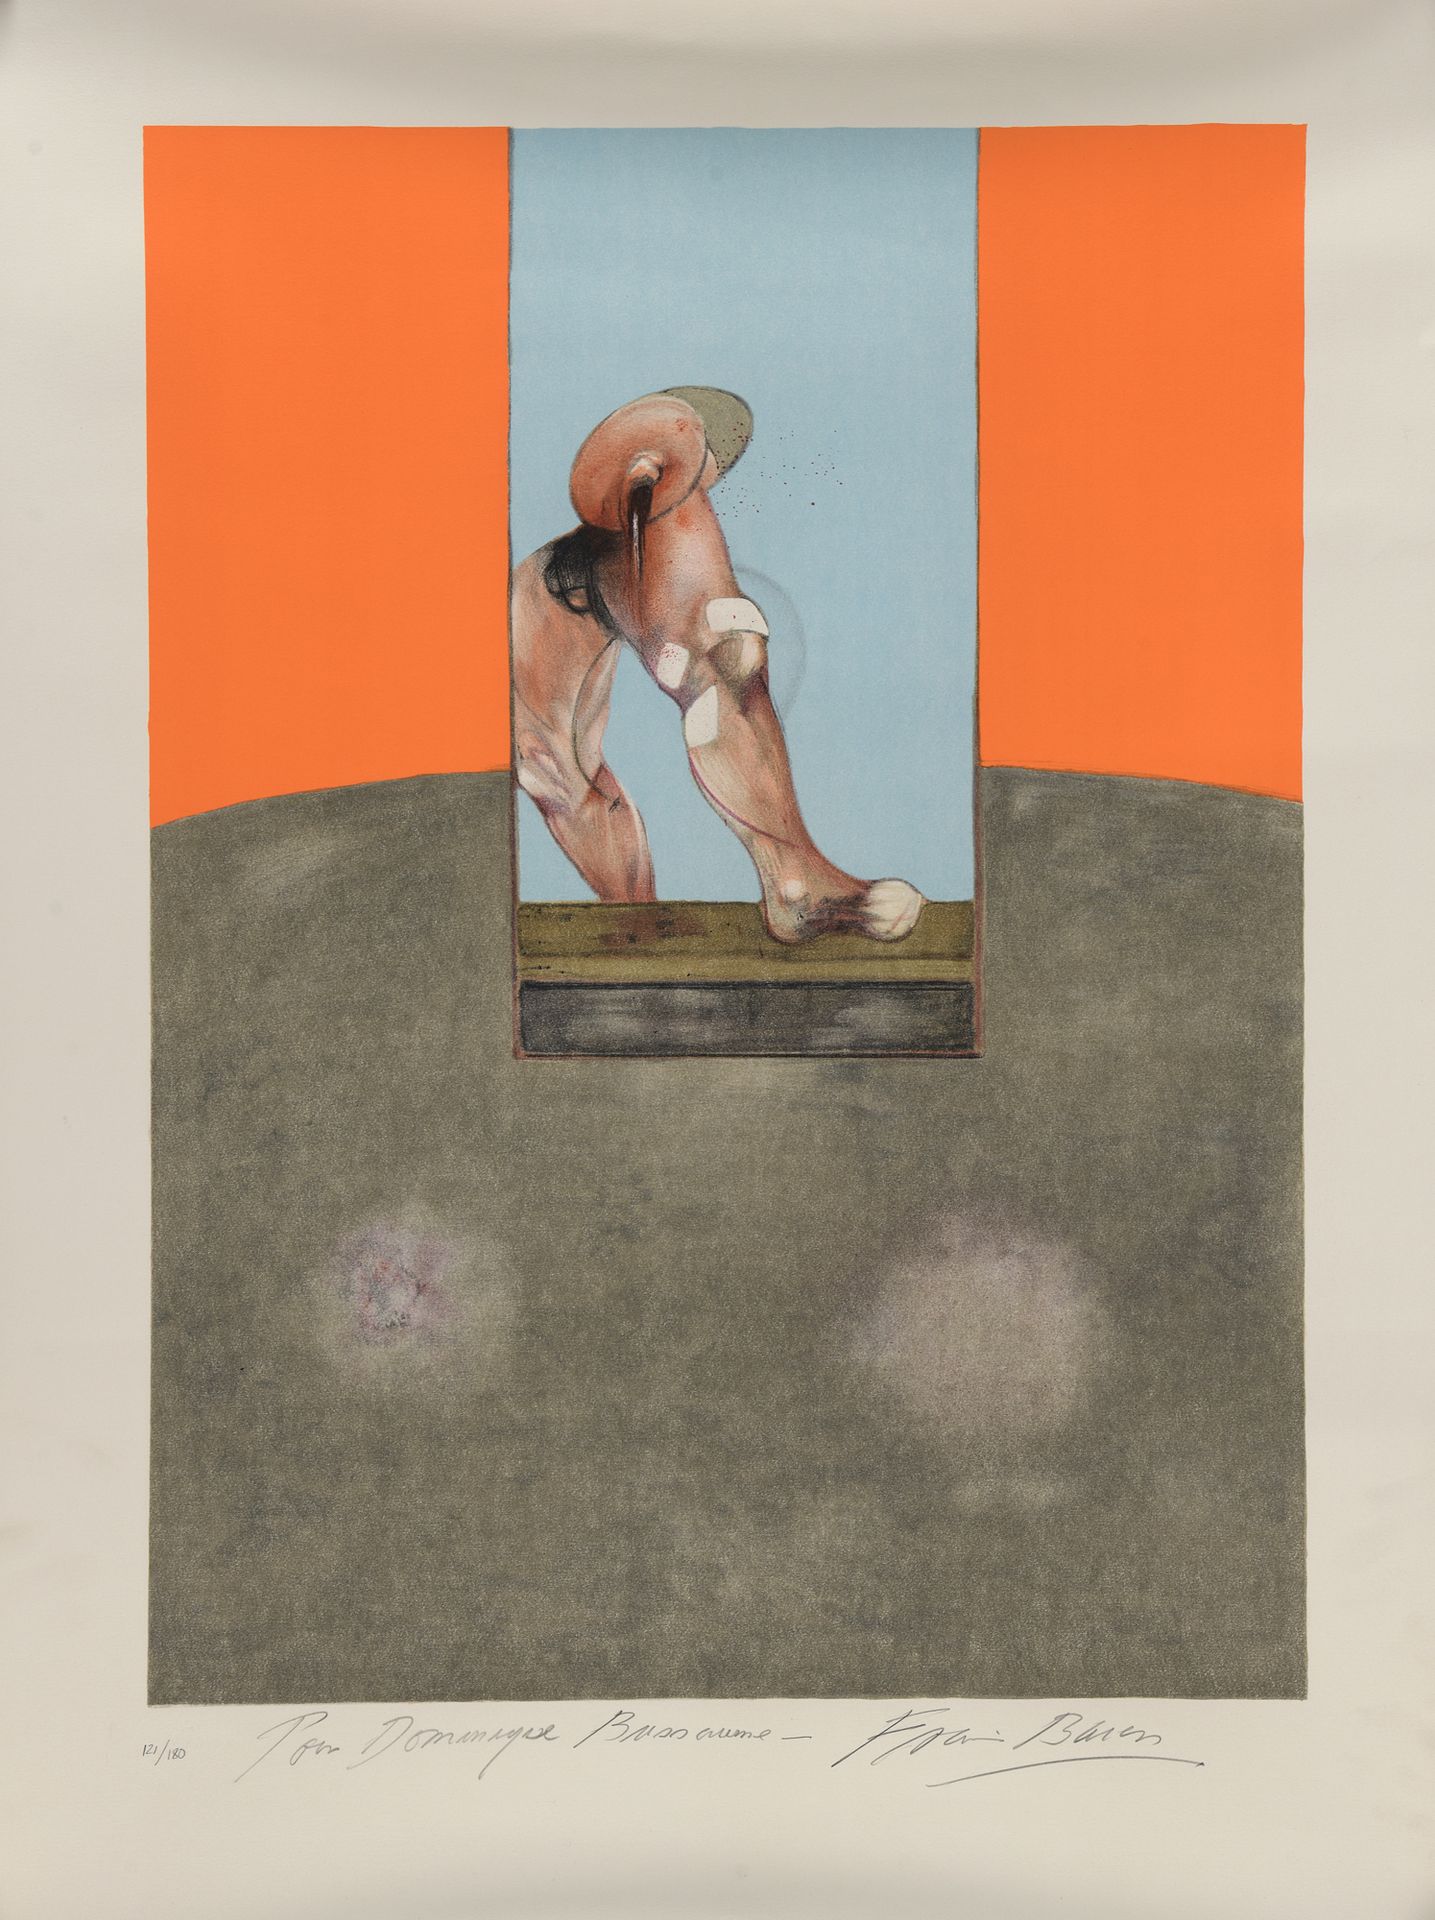 Null 弗朗西斯-巴肯(1909-1992)

三联画, 1987年

Arches纸上的彩色石版画，1989年，根据1987年三联画的中心板块。

右下方有&hellip;